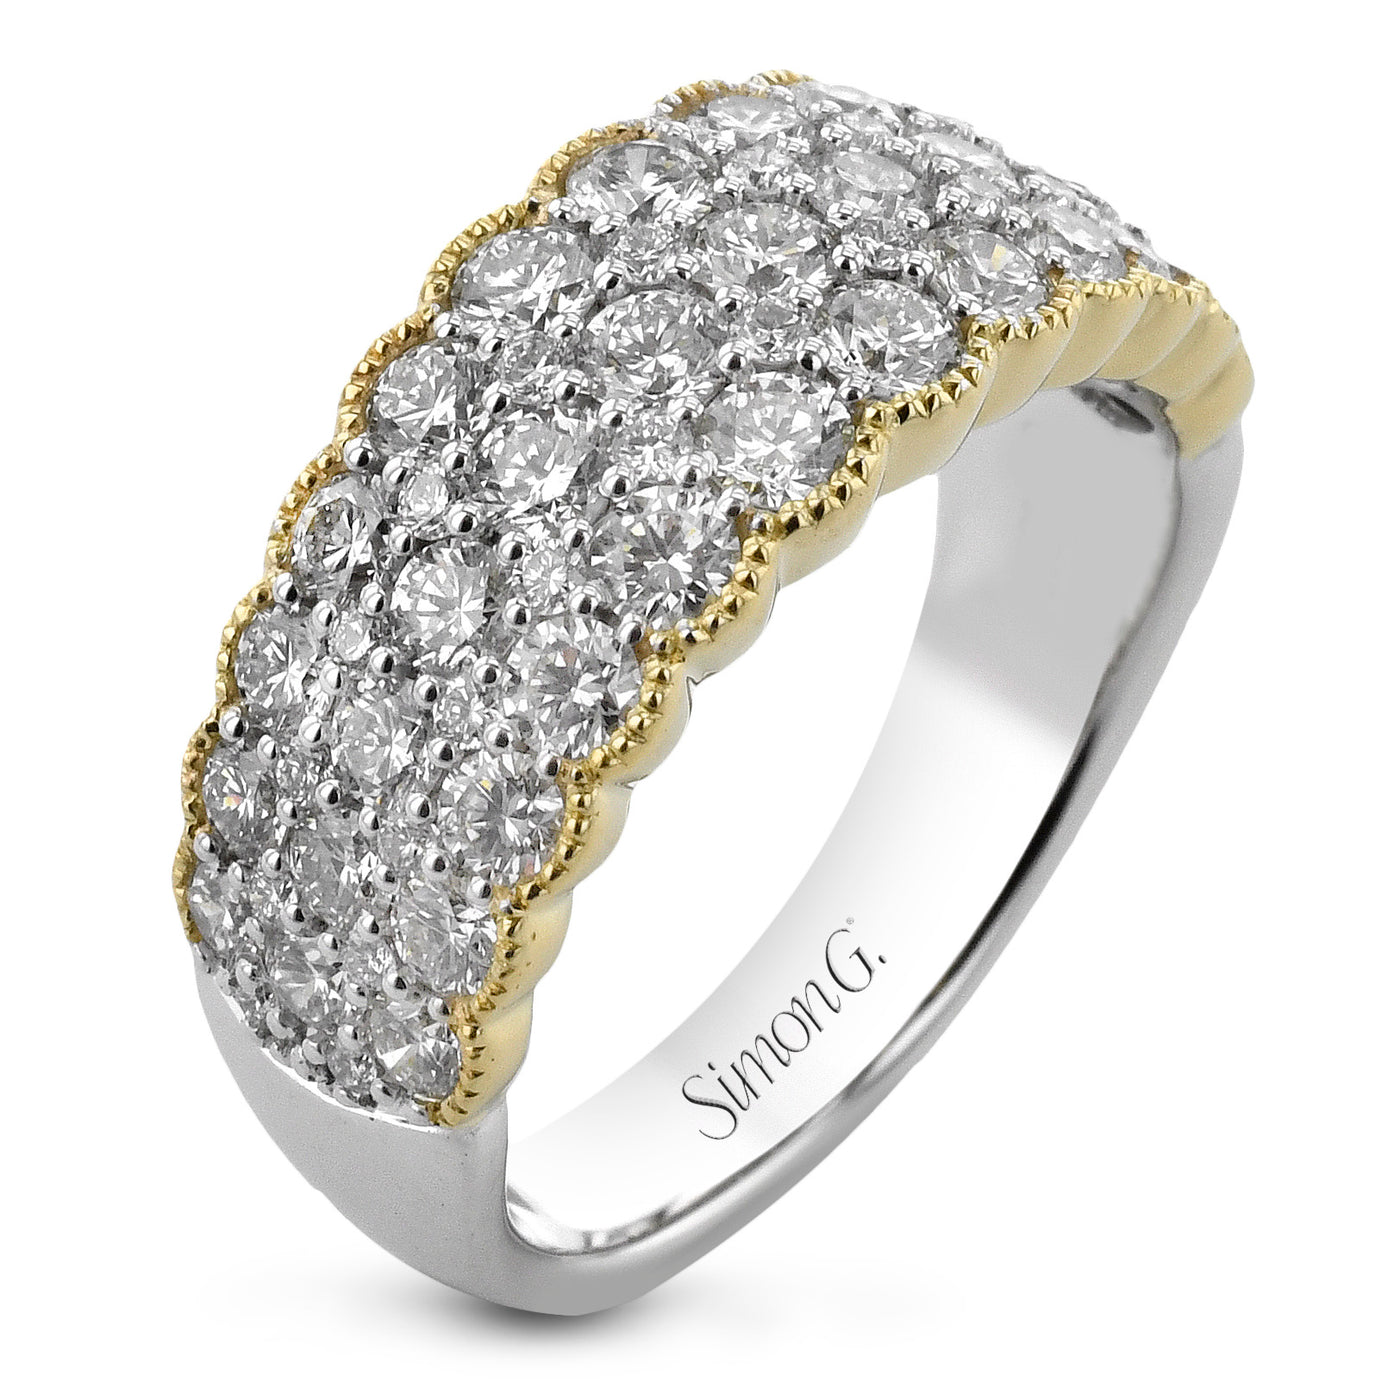 Simon G Jewelry 18 Karat Two-Tone Classic Style Round Diamond Fashion Ring - Lady's LR3213